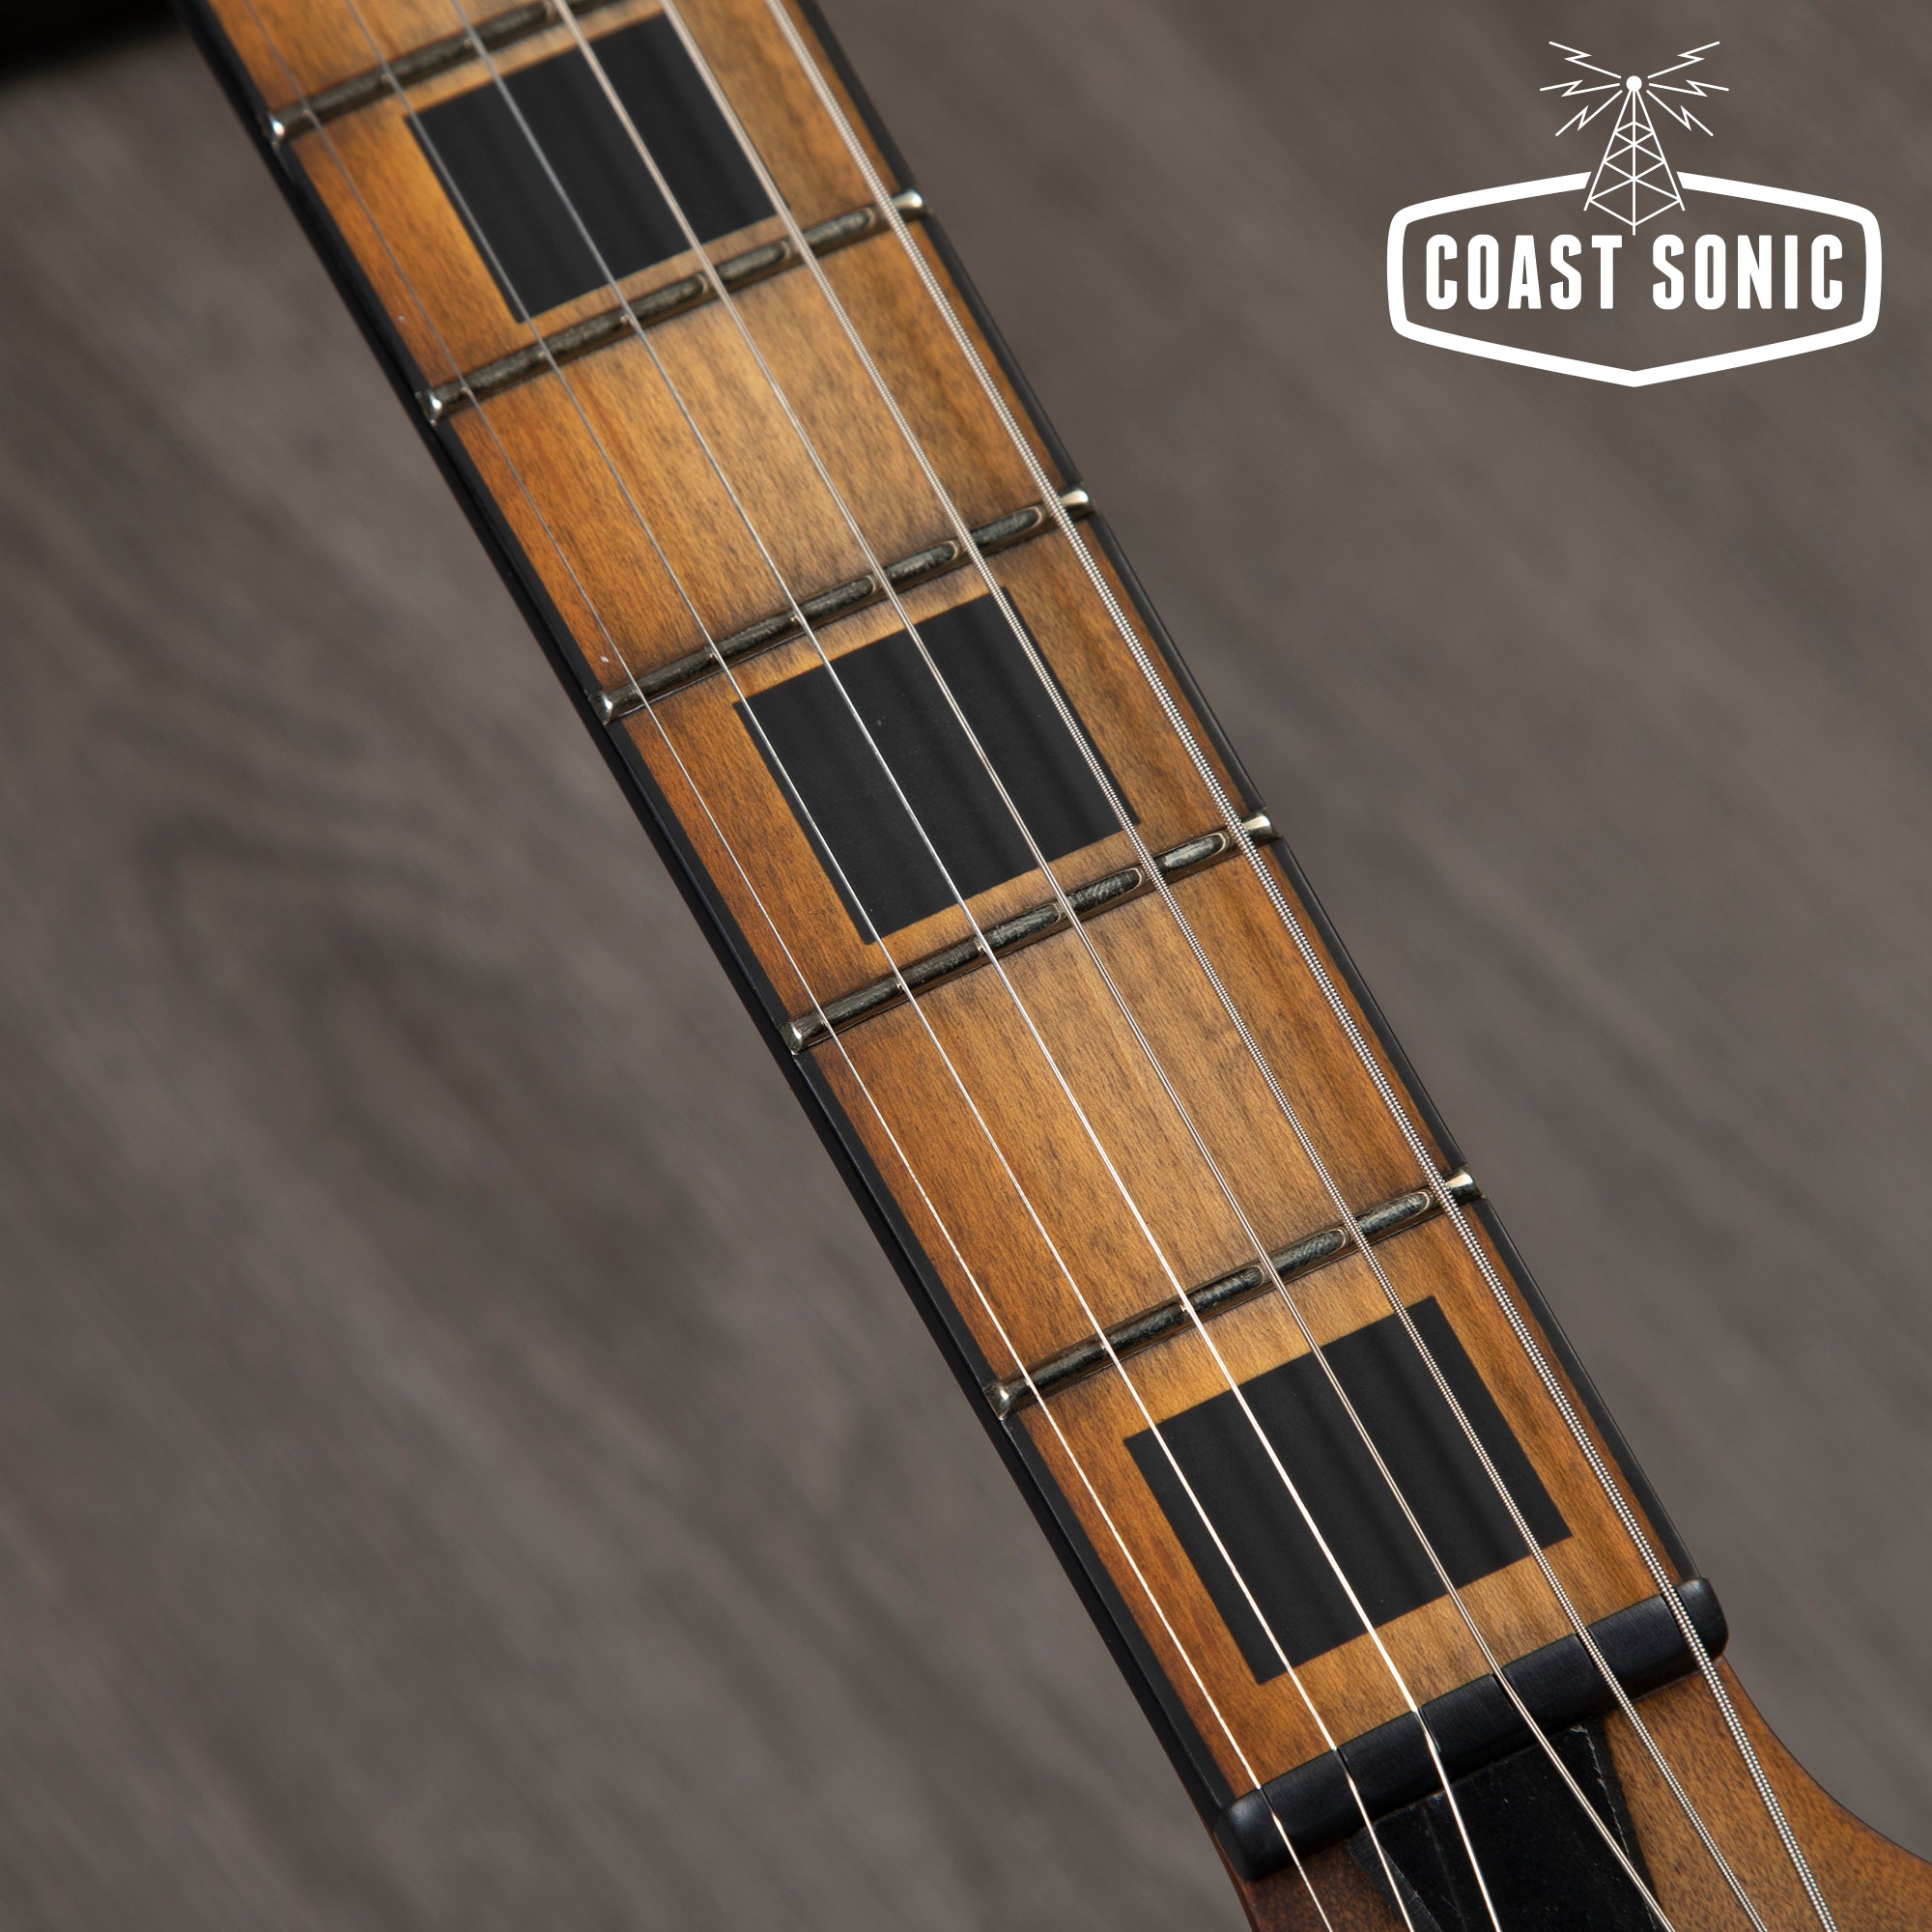 Dunable Guitars Yeti - Burnt Charcoal Burst